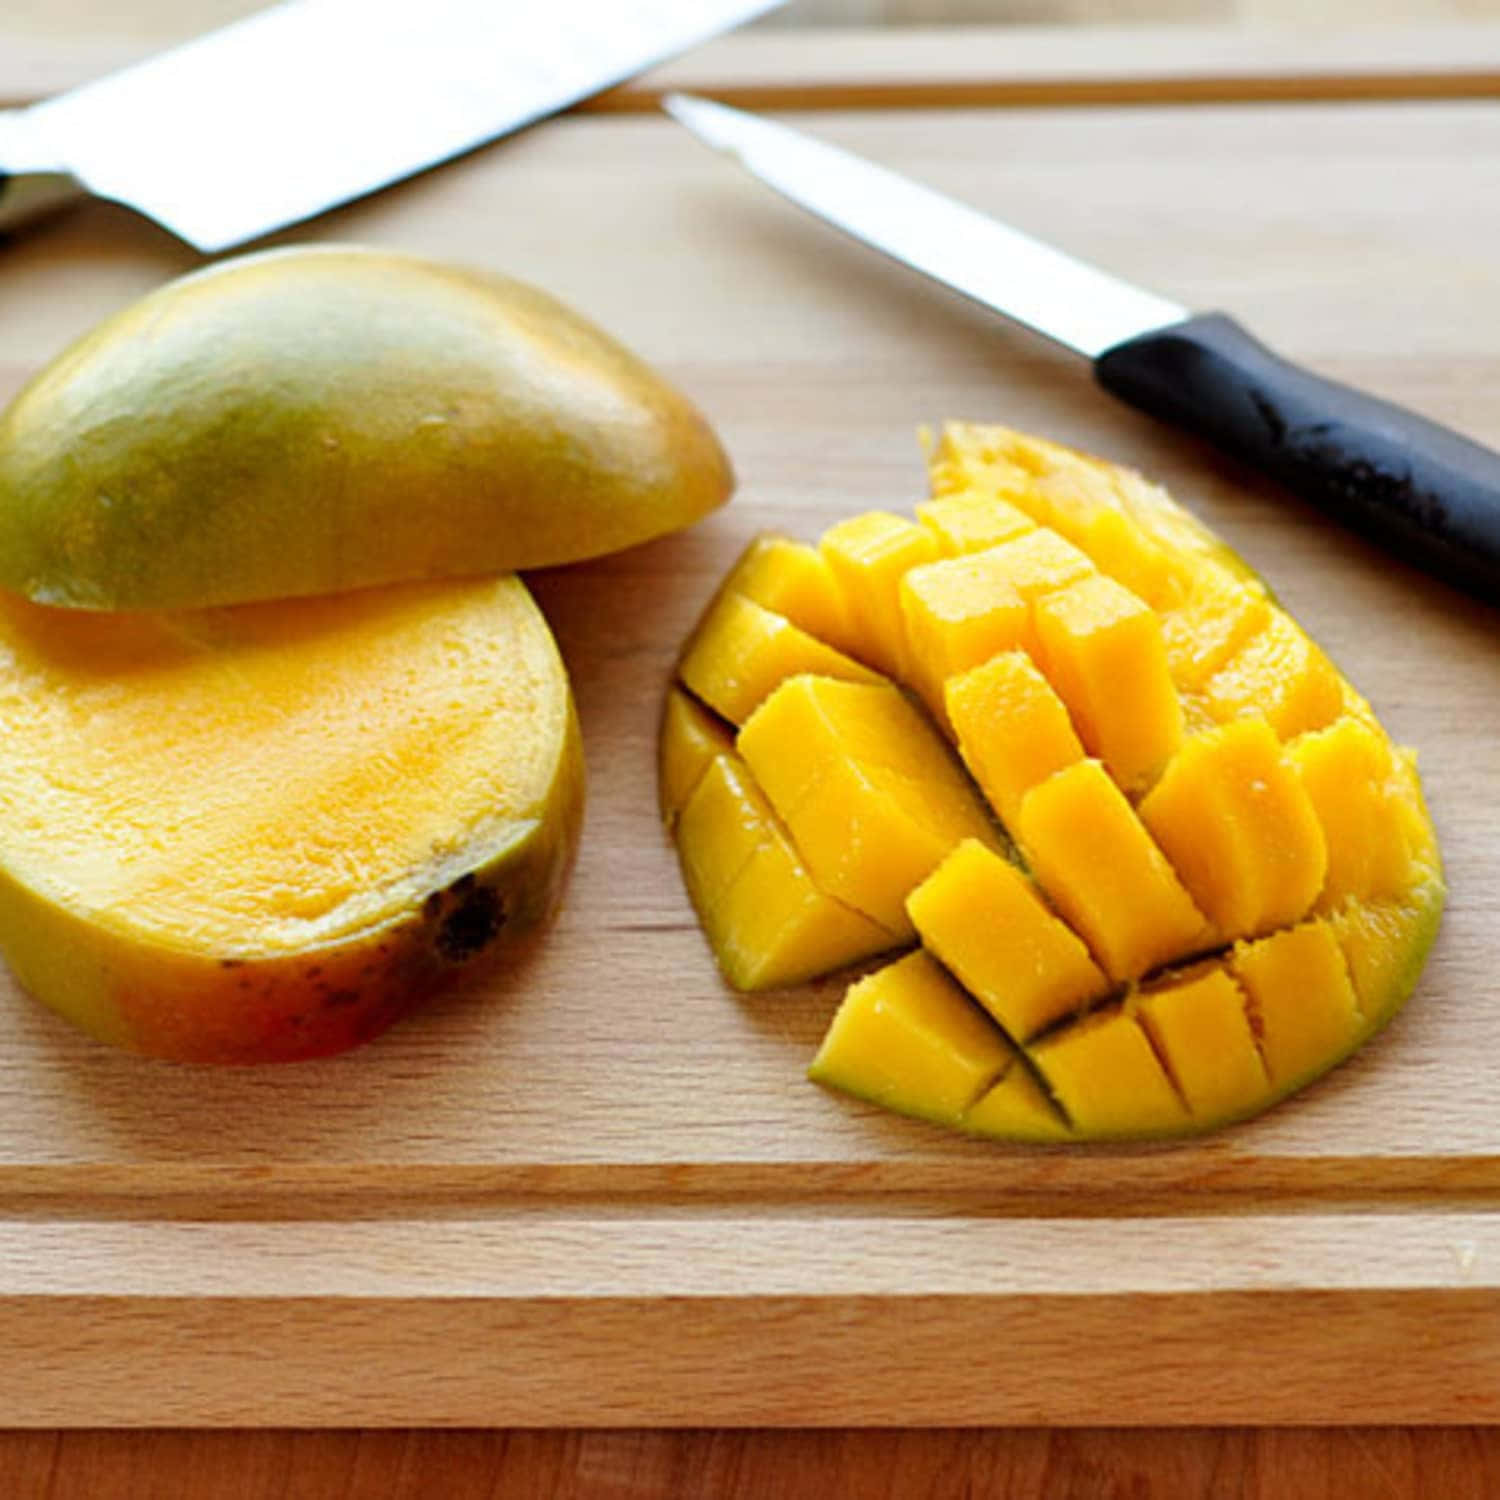 Enjoying the sweet taste of a ripe mango!